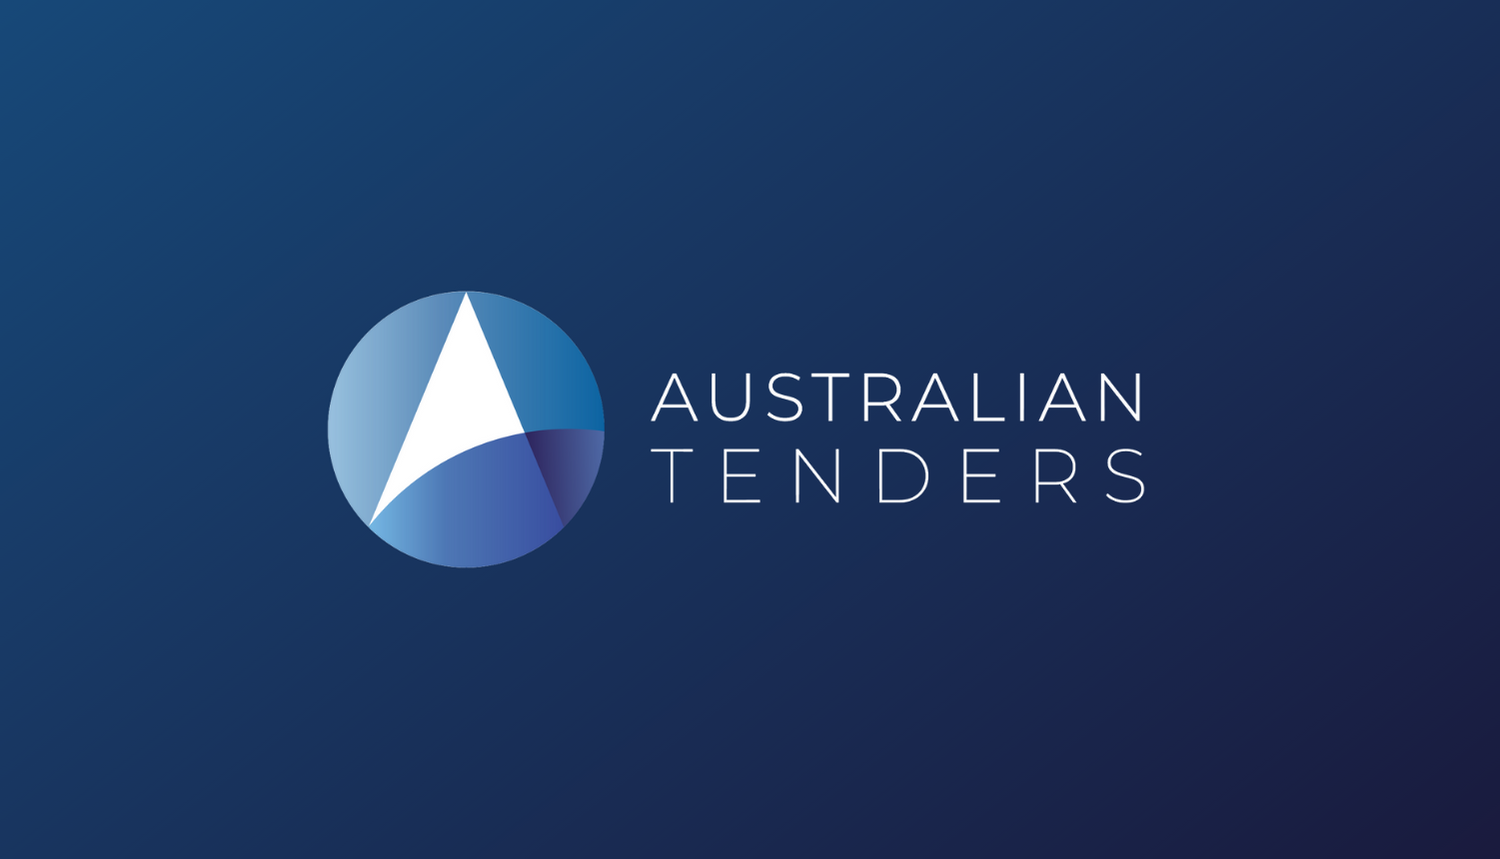 https://info.australiantenders.com.au/hubfs/Branding/Corporate%20Material%20-%20Branding/AT%20Videos/Australian%20Tenders%20HD%20(Introduction).mp4